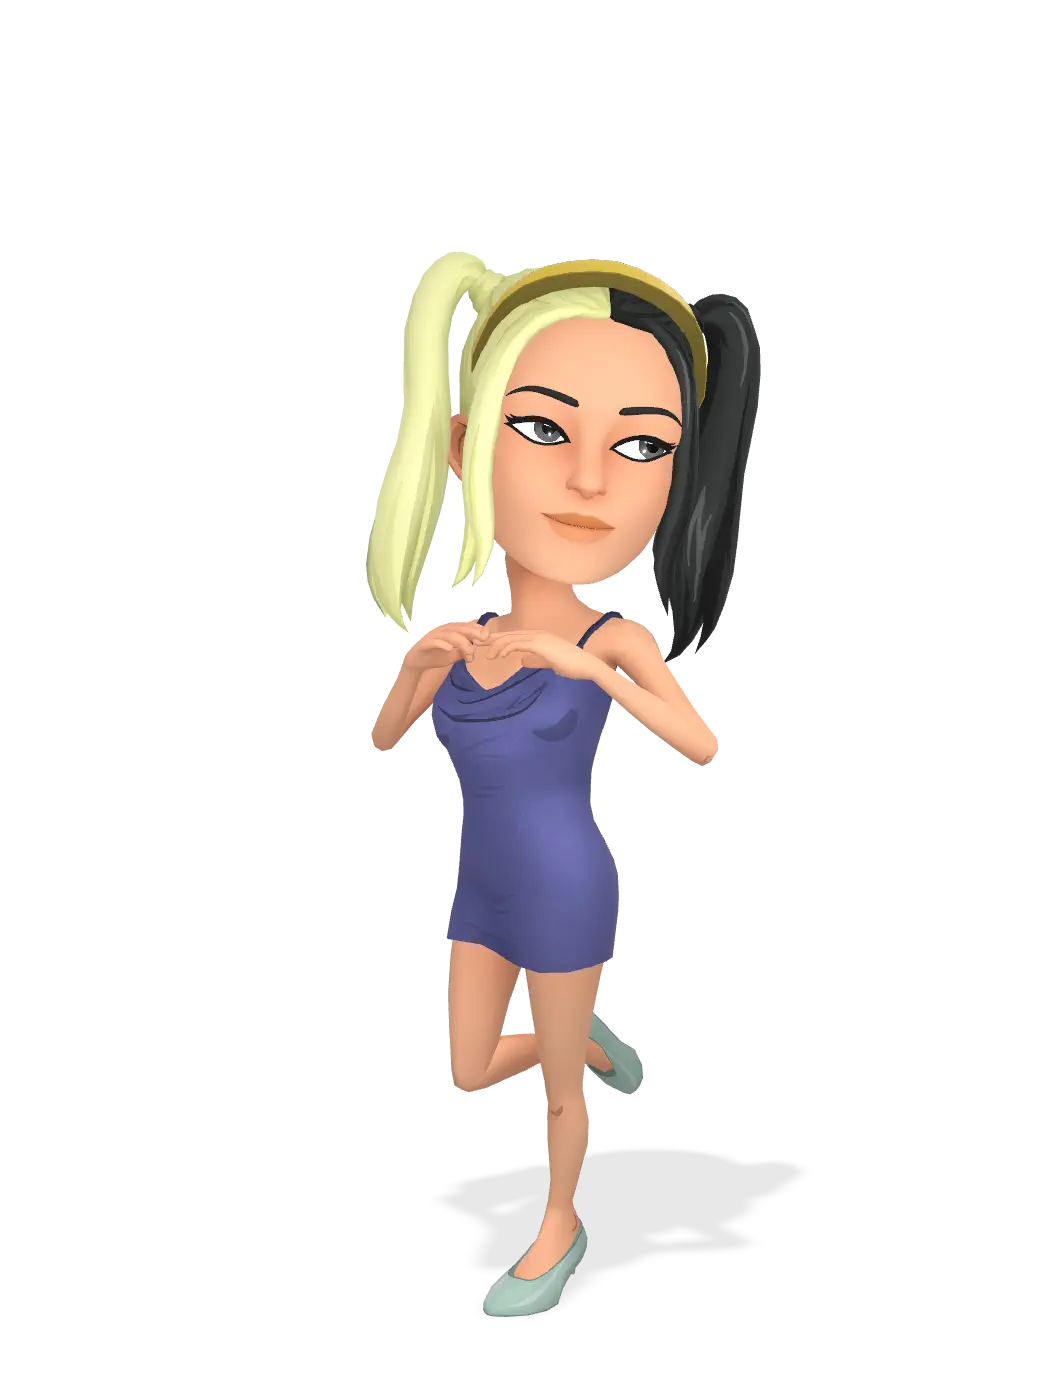 3D Bitmoji for your_babyy25 avatar